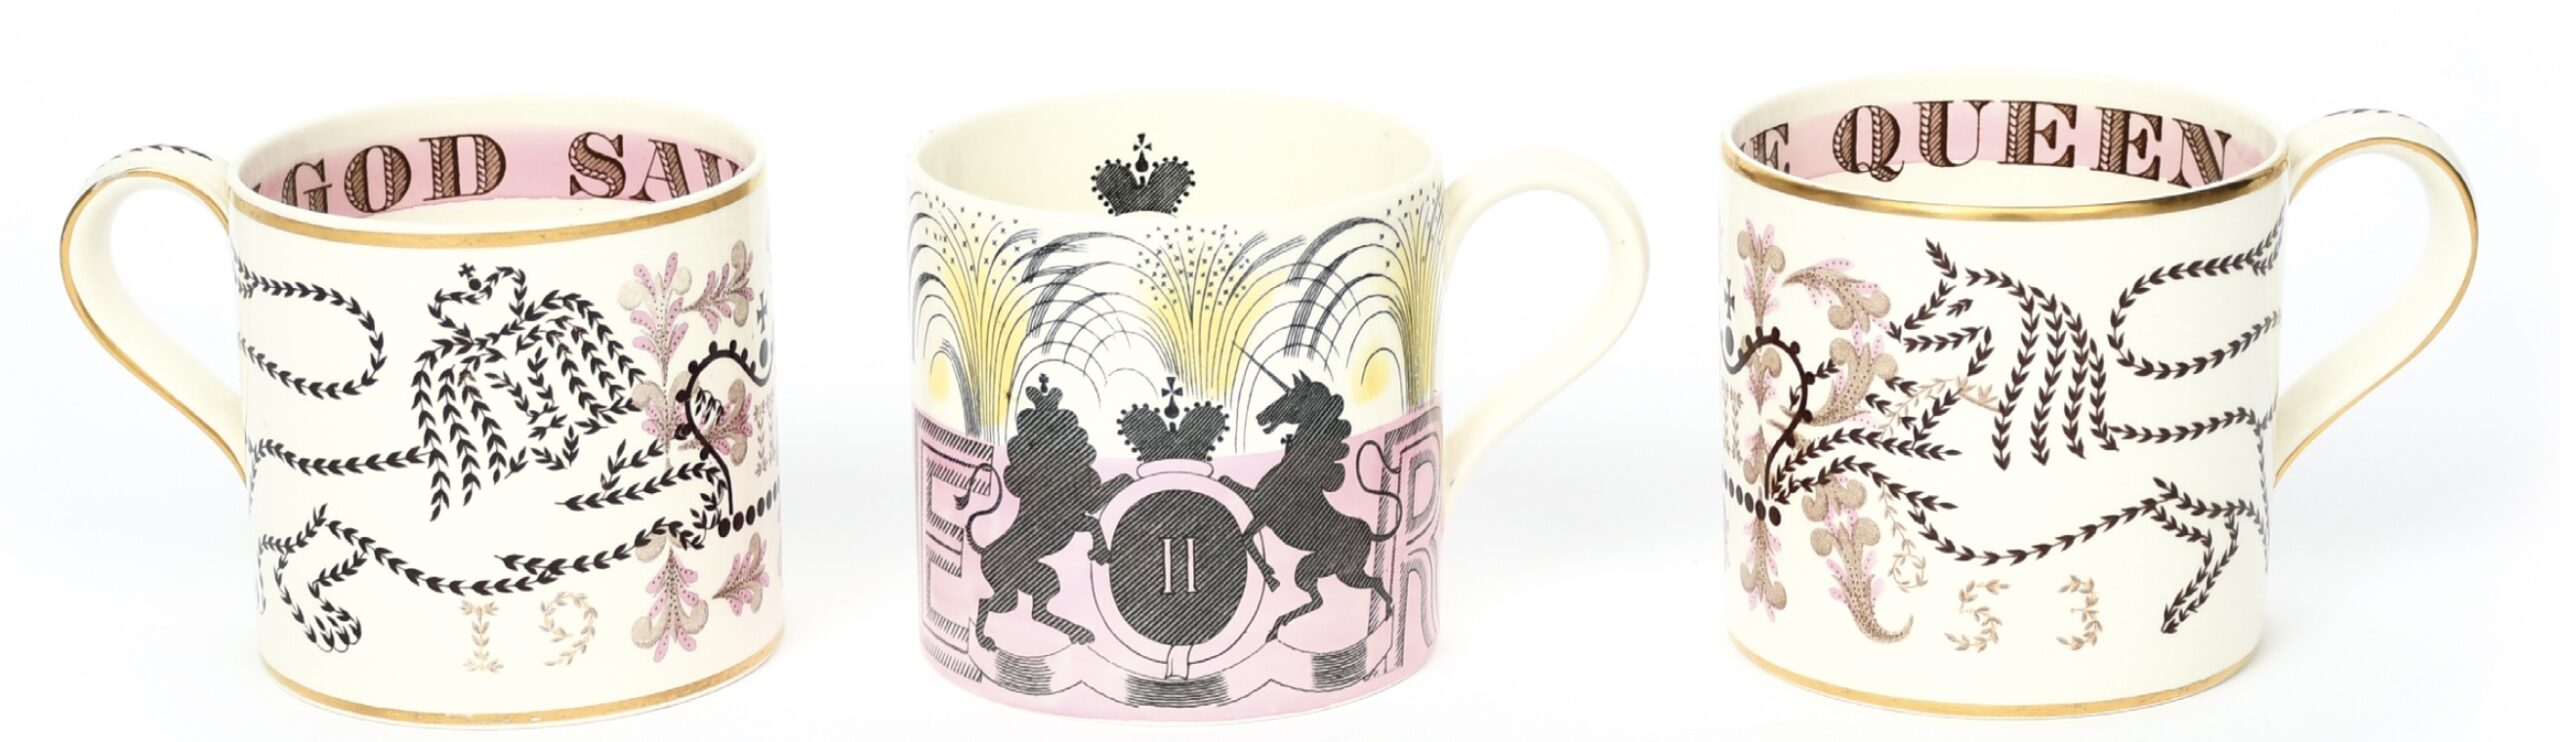 Views of a Wedgwood commemorative mug for the coronation of Elizabeth II in 1953